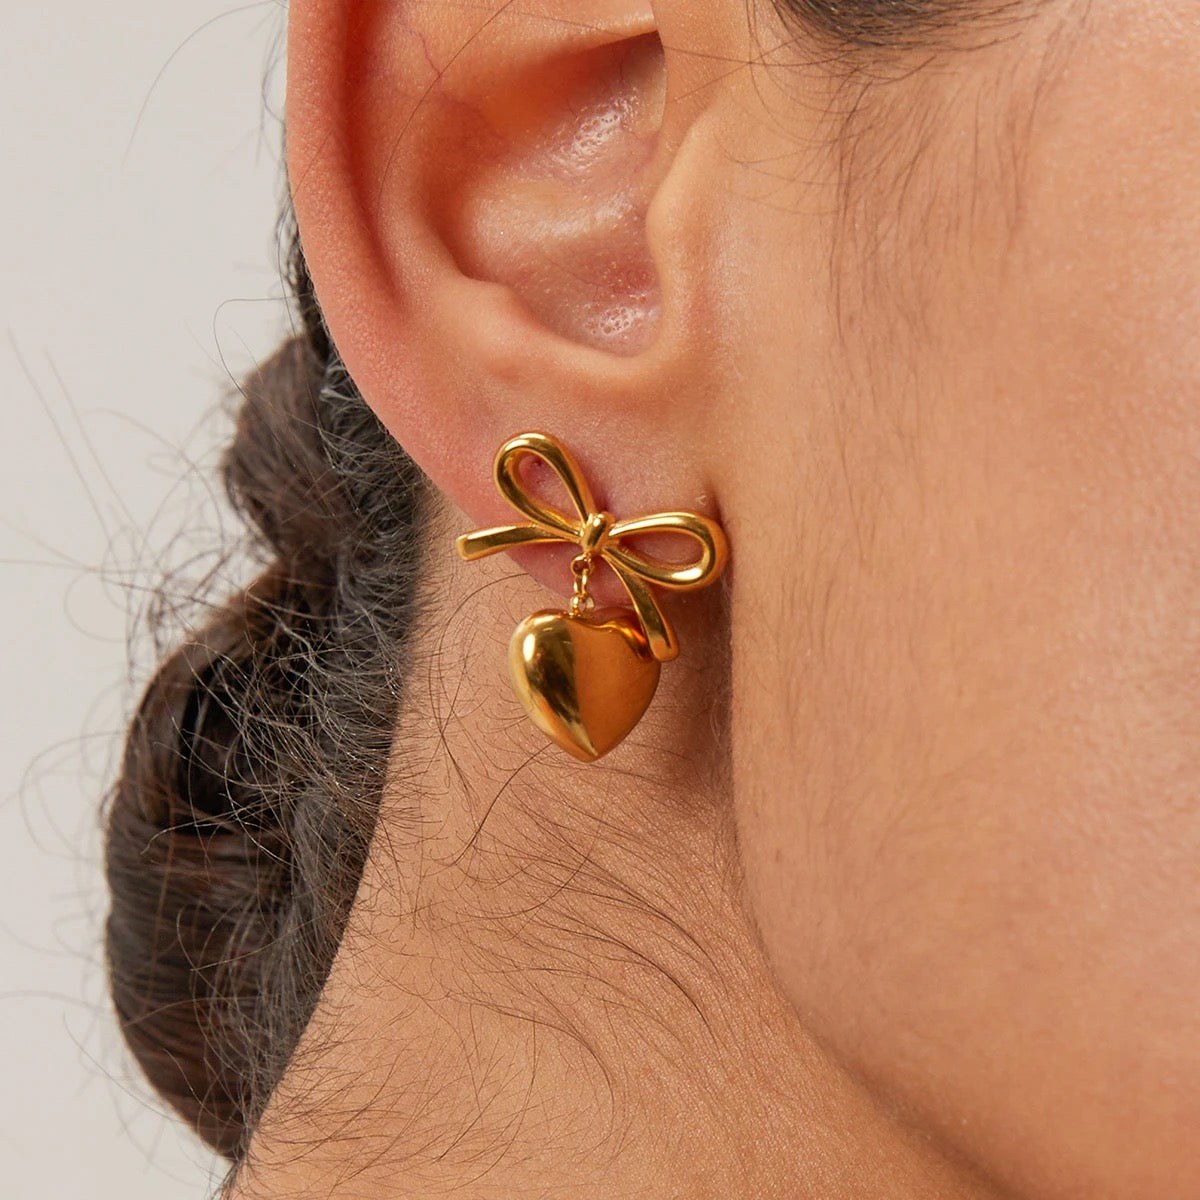 Paisley bow and heart earrings